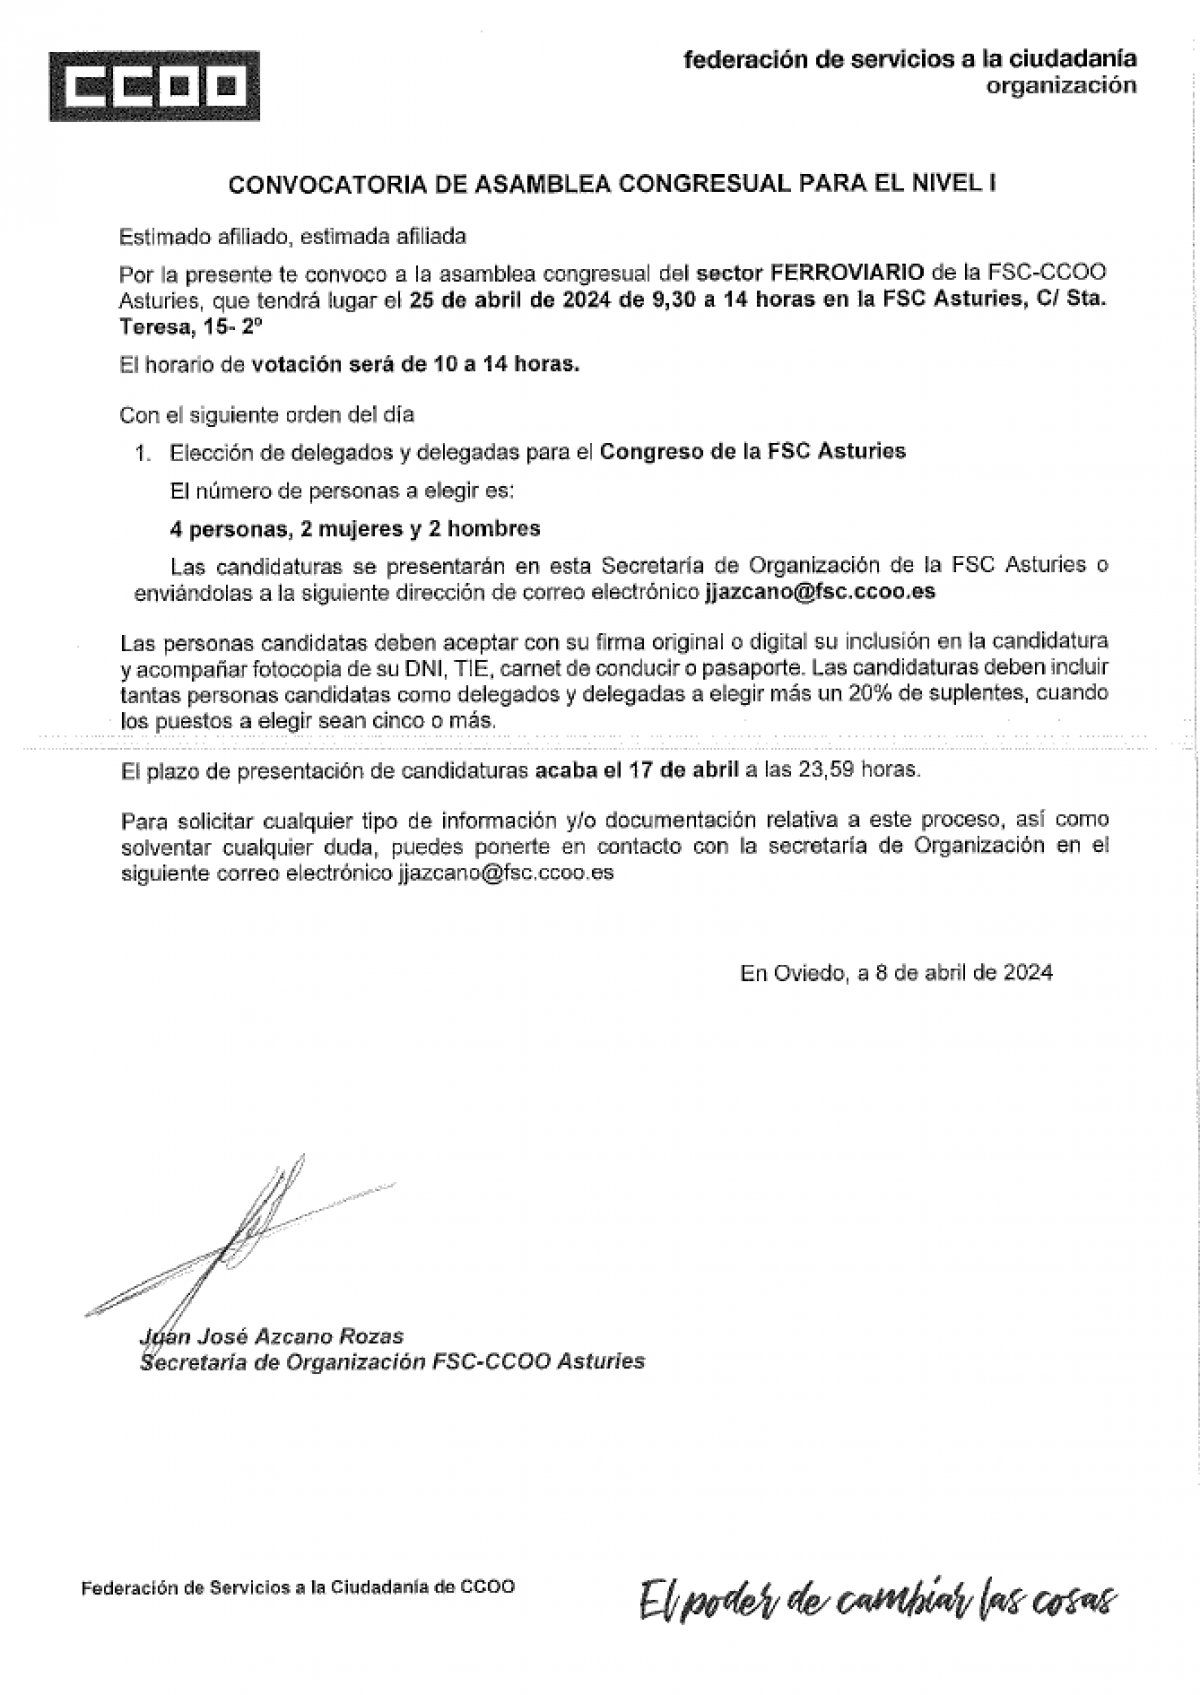 Asamblea Congresual. Congreso FSC Asturias. Sector Ferroviario